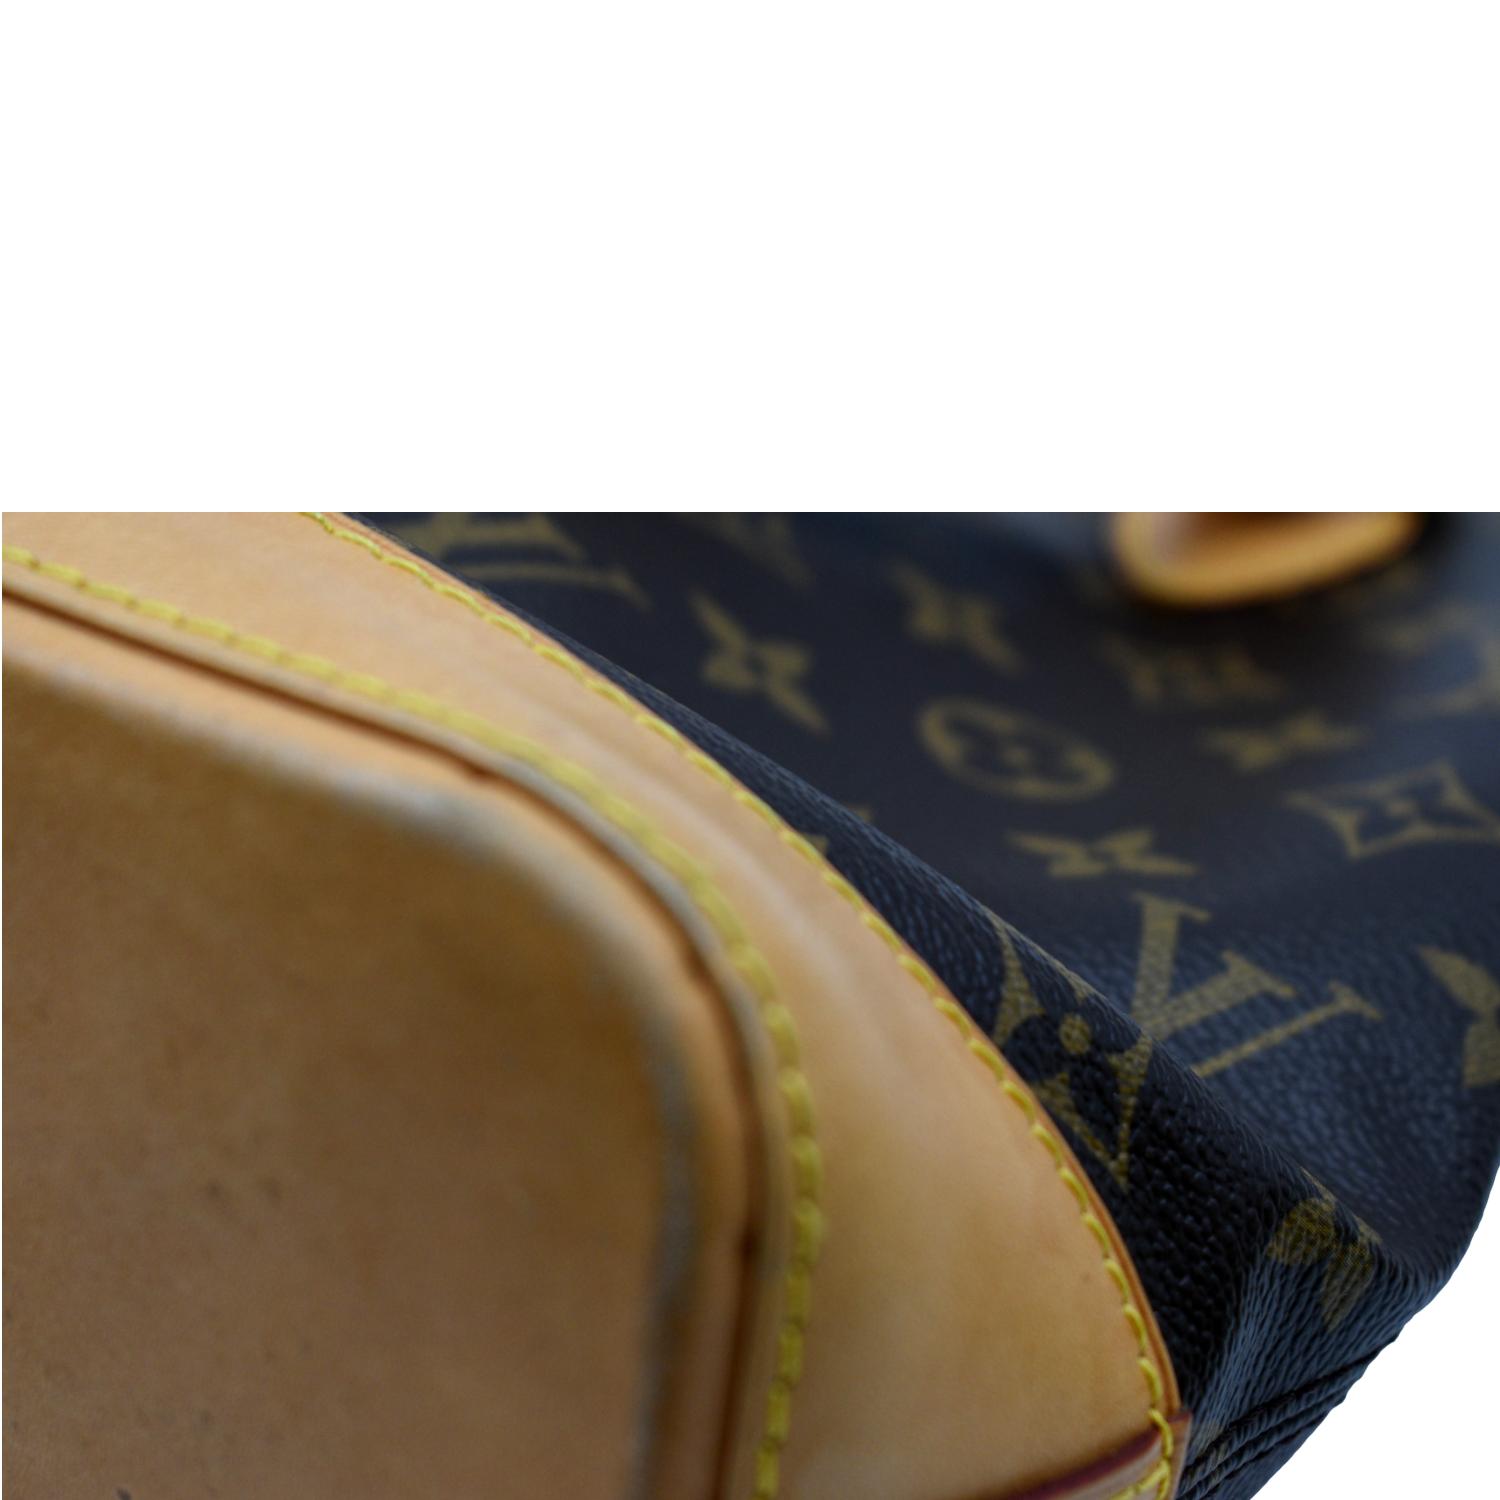 Auth Louis Vuitton Monogram Desire Lockit Vertical MM Handbag Black